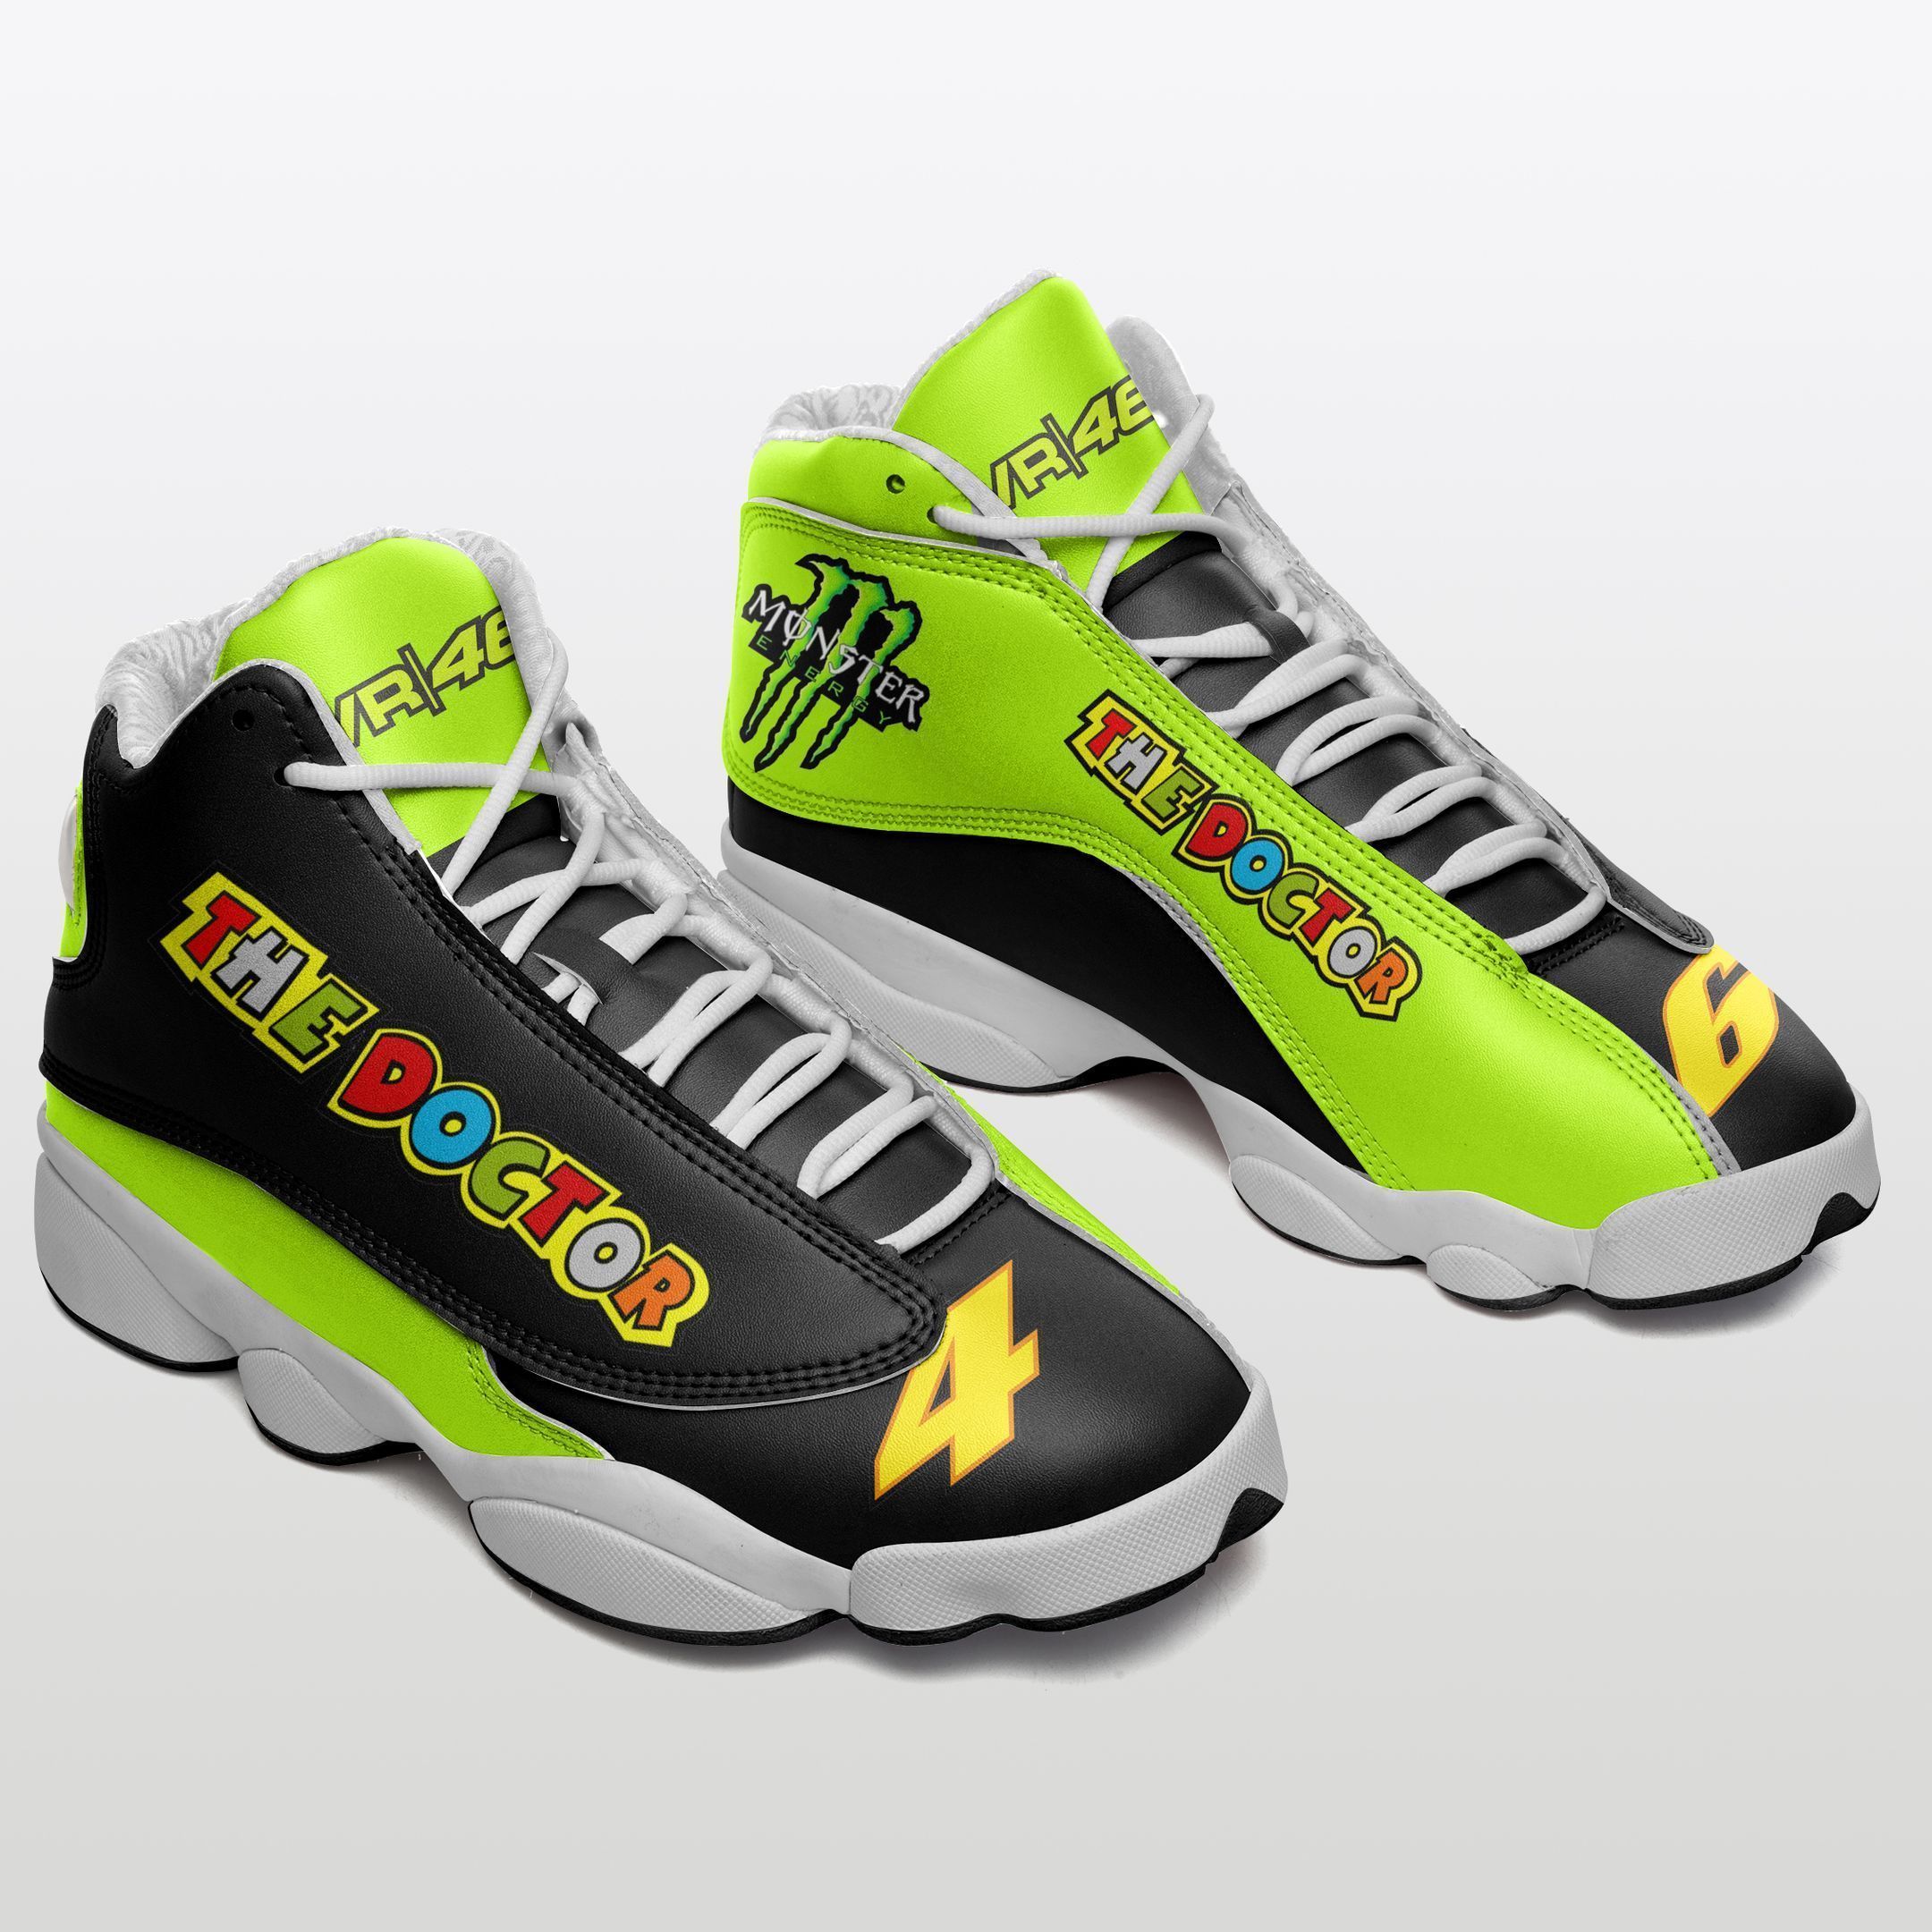 Vr46 Bdaht Air Jd13 Shoes Ver1 Greenyellow Sneakers Air Jordan 13 ...